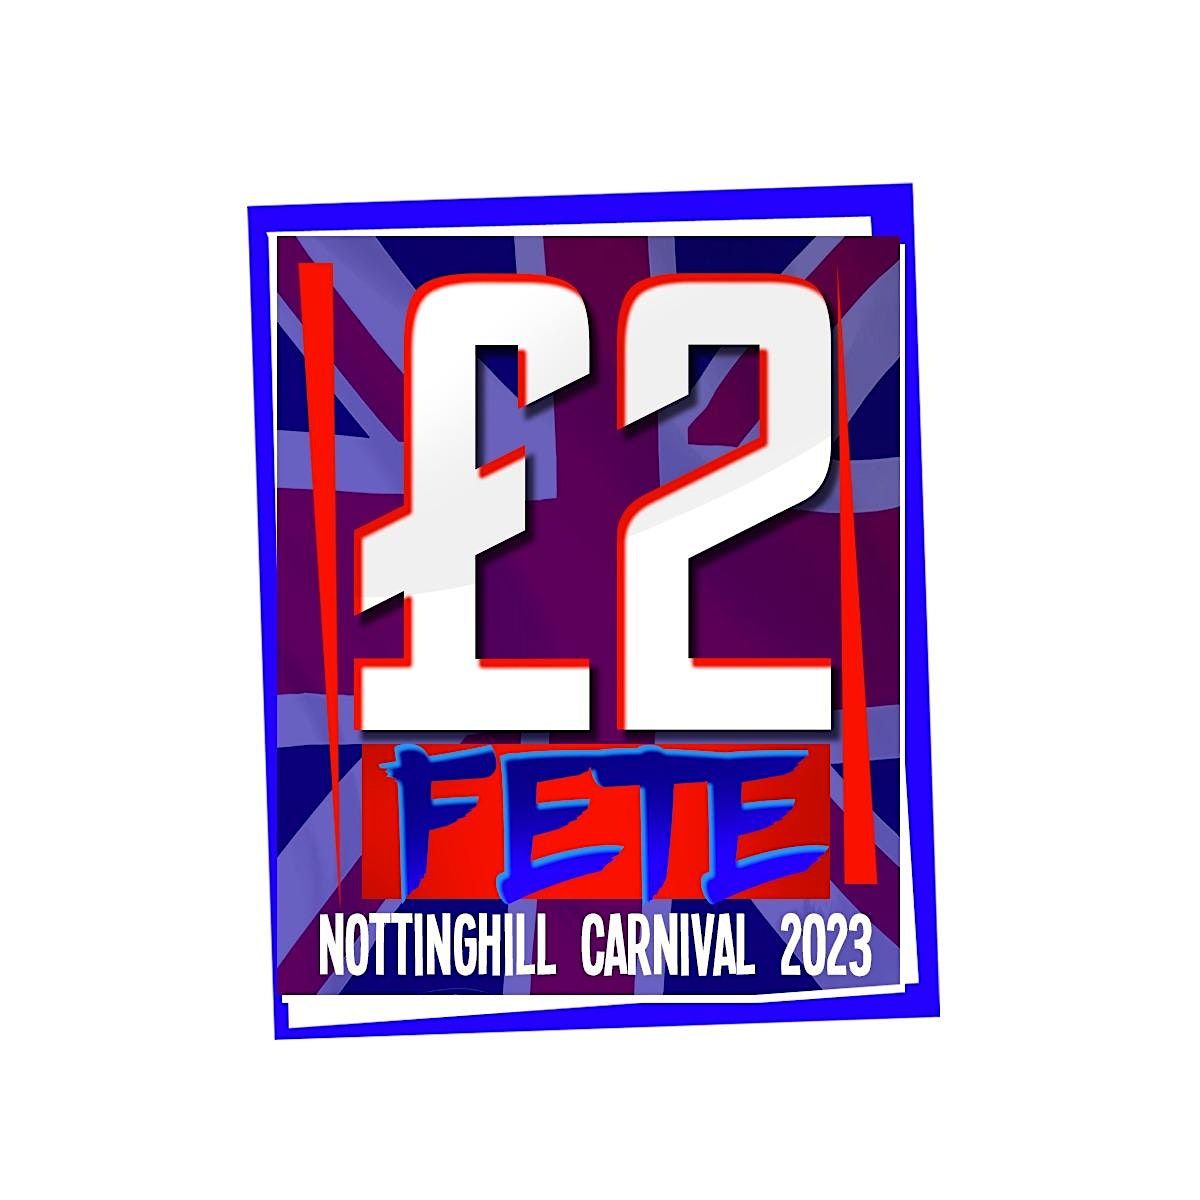 $2 FETE  Heads to Nottinghill Carnival  LONDON UK